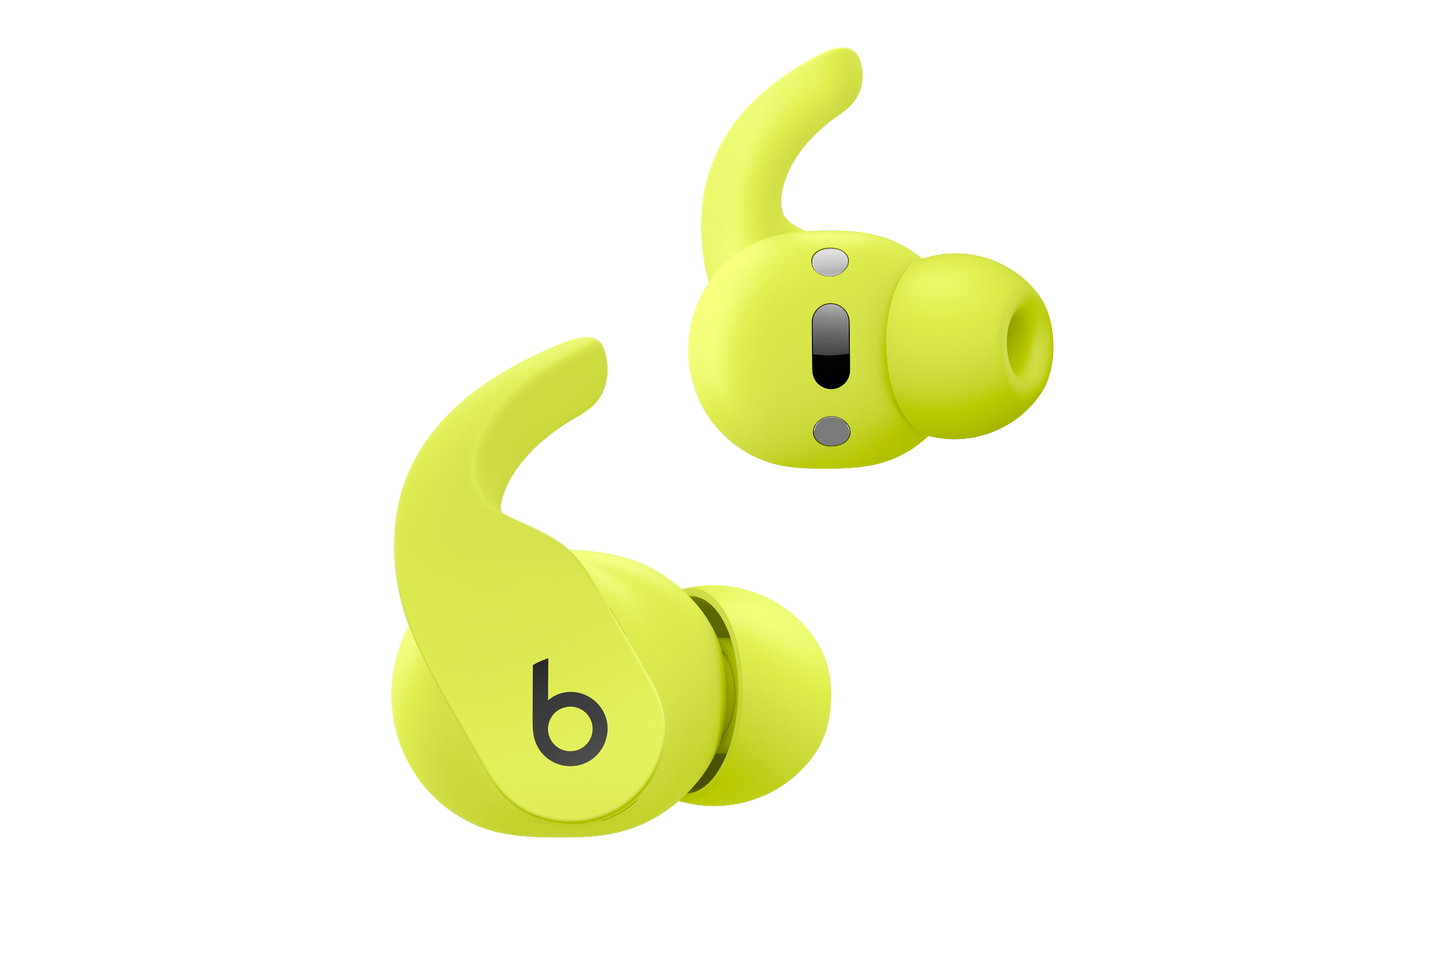 Beats Fit Pro True Wireless Earbuds — Volt Yellow